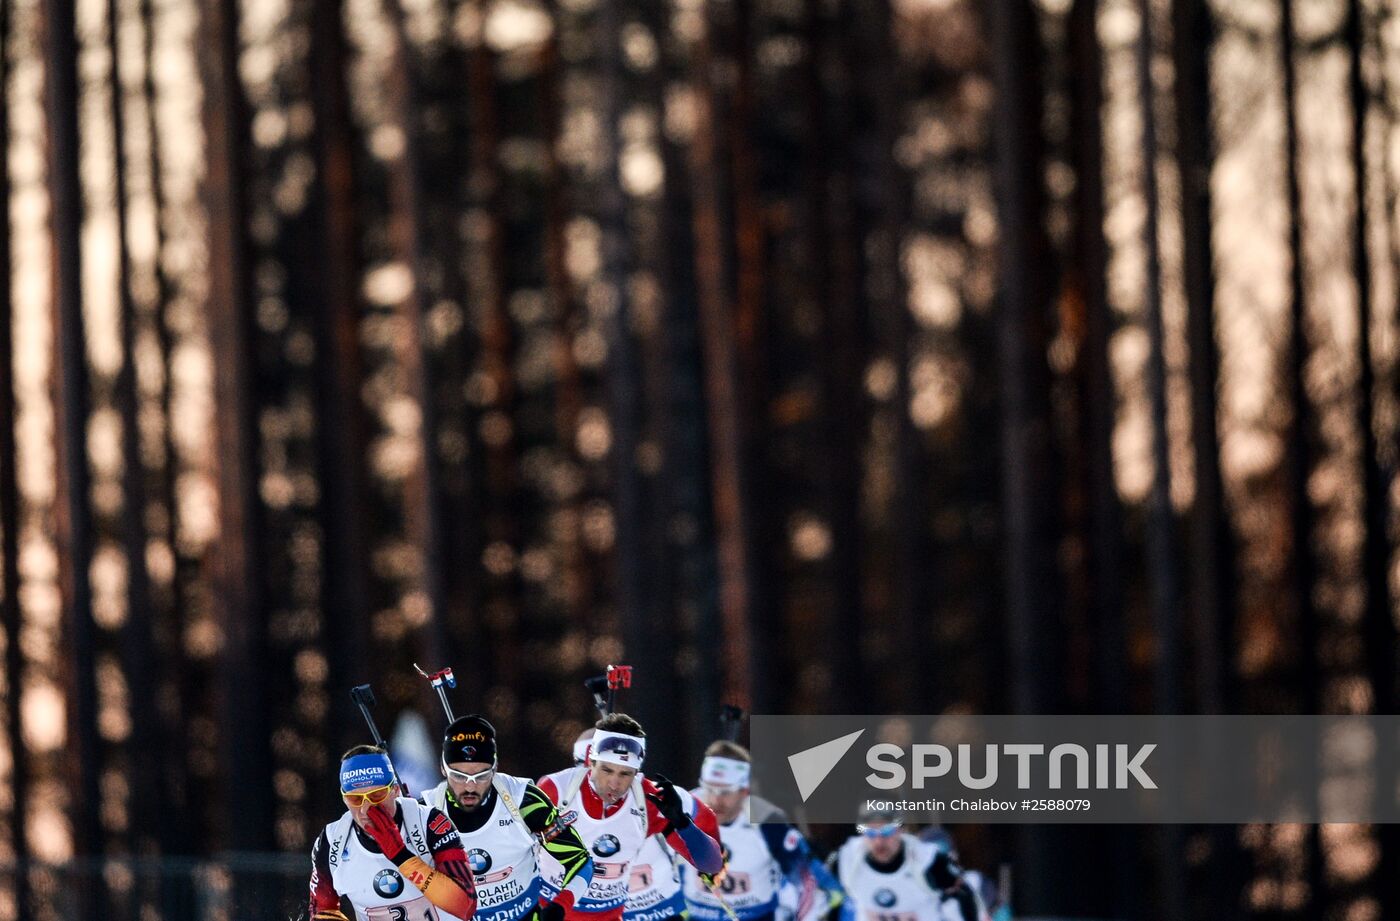 Biathlon world championships. Men's relay race